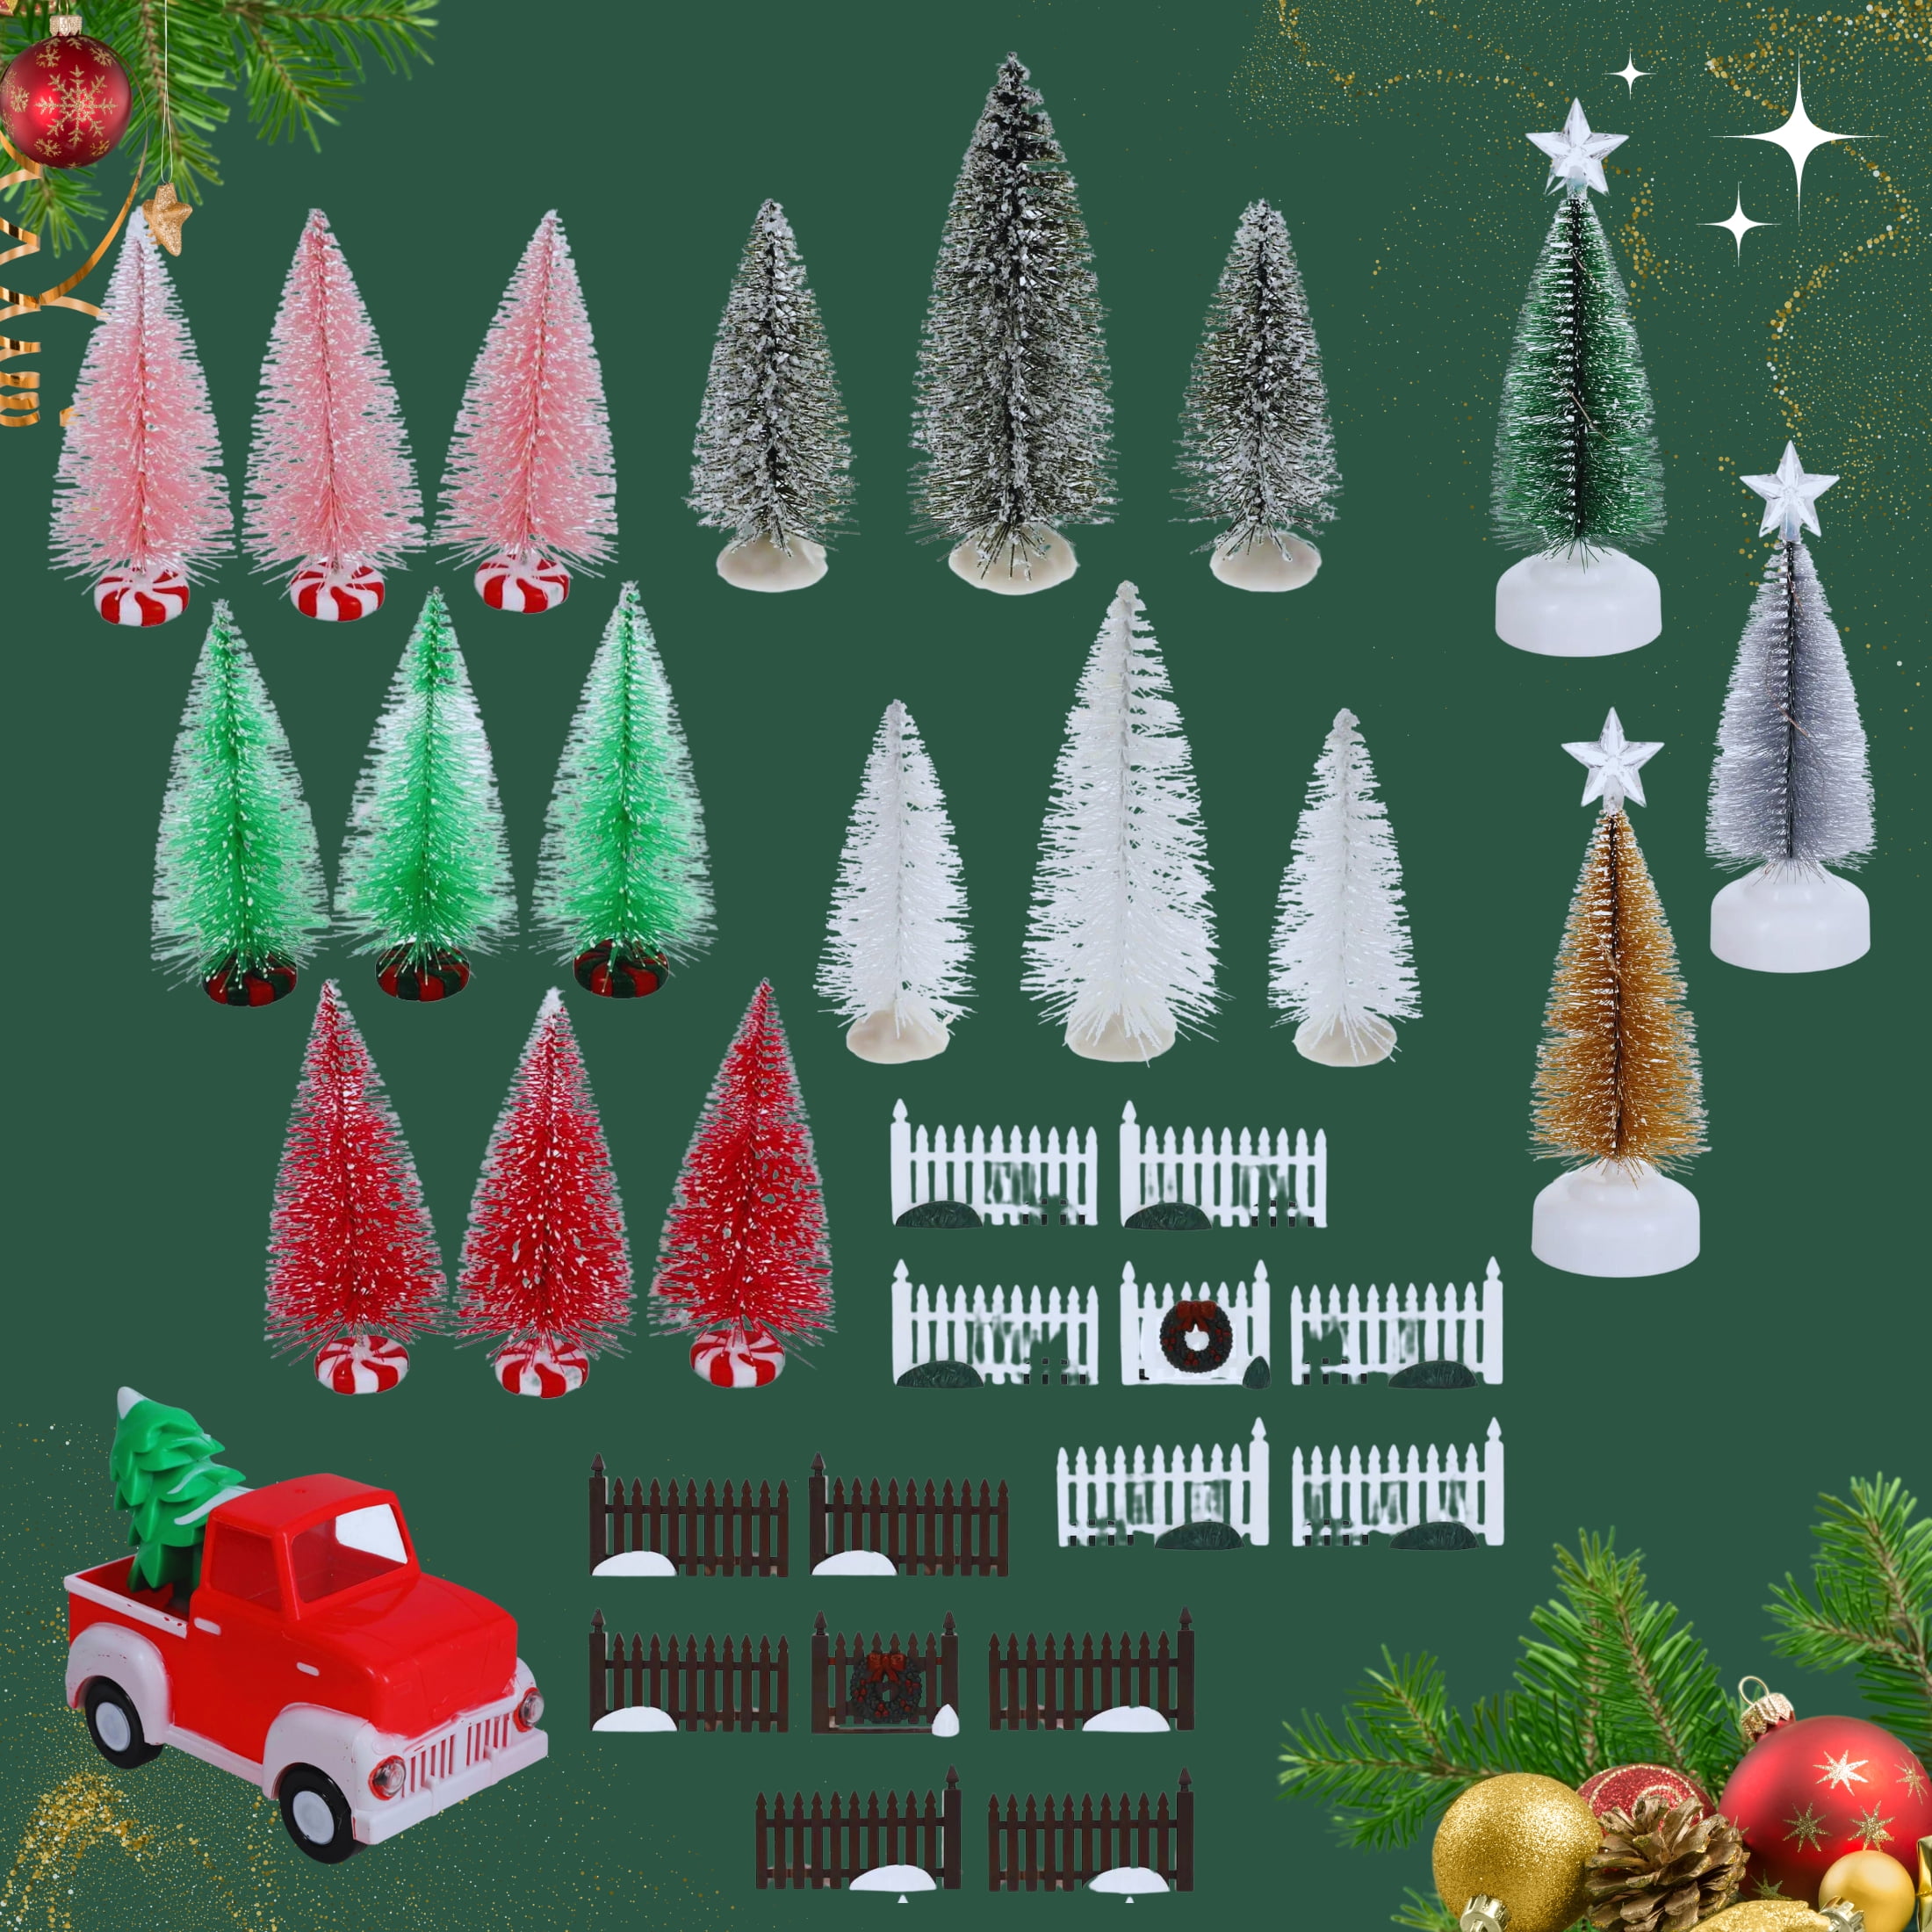 NEW Cobblestone Corners Christmas Miniatures Winter Village • 7 pcs • LED